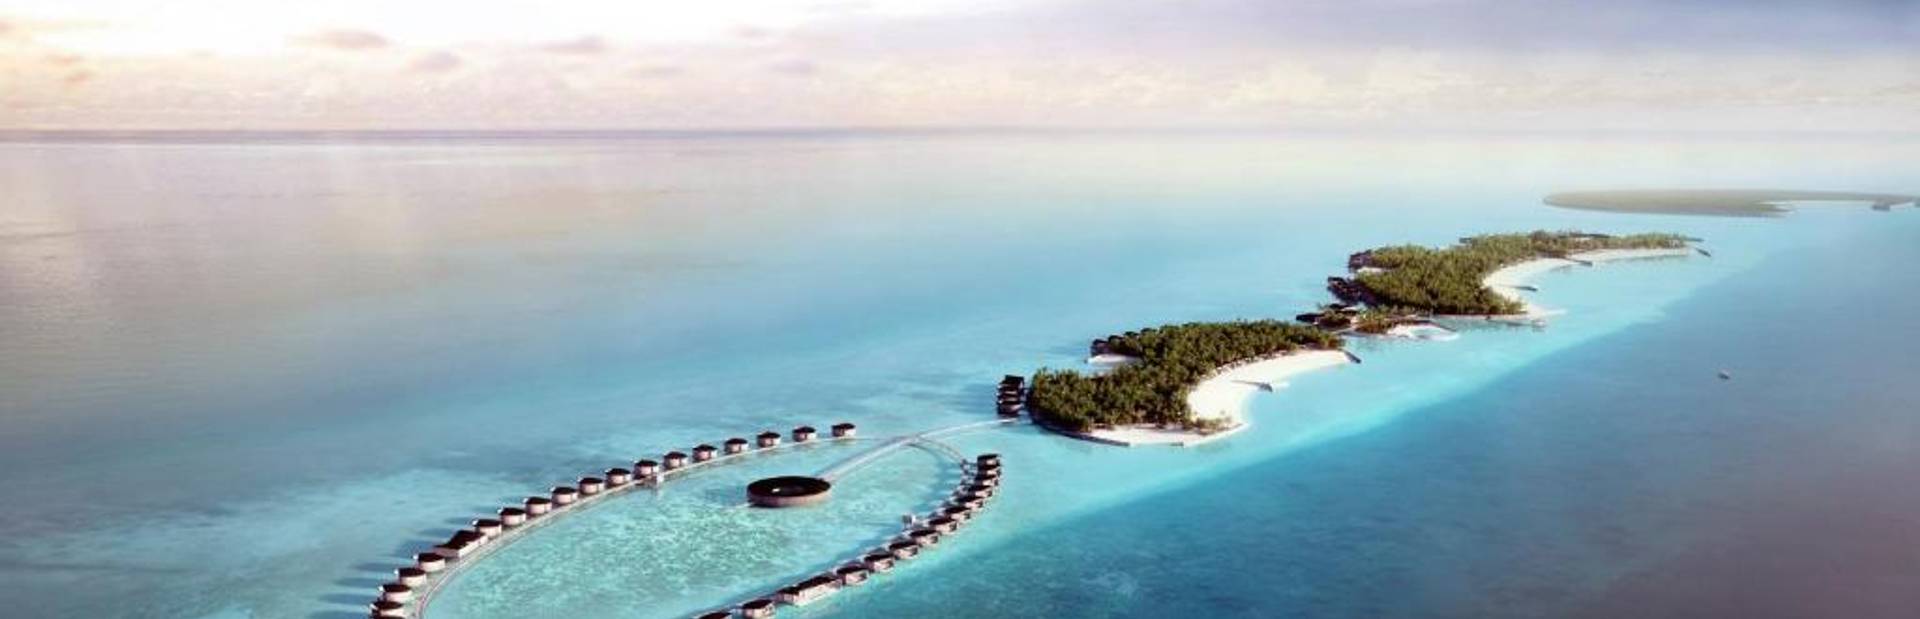 Ritz Carlton Maldives Image 1